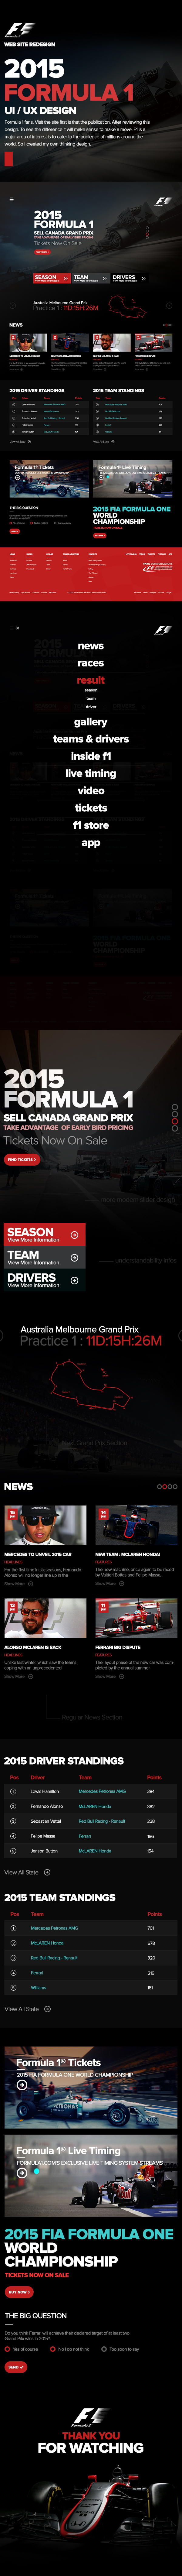 F1 Redesign f1 unofficial user interface Layout formula1.com Formula 1 race car UI dark modern 2015 design sport motorsports